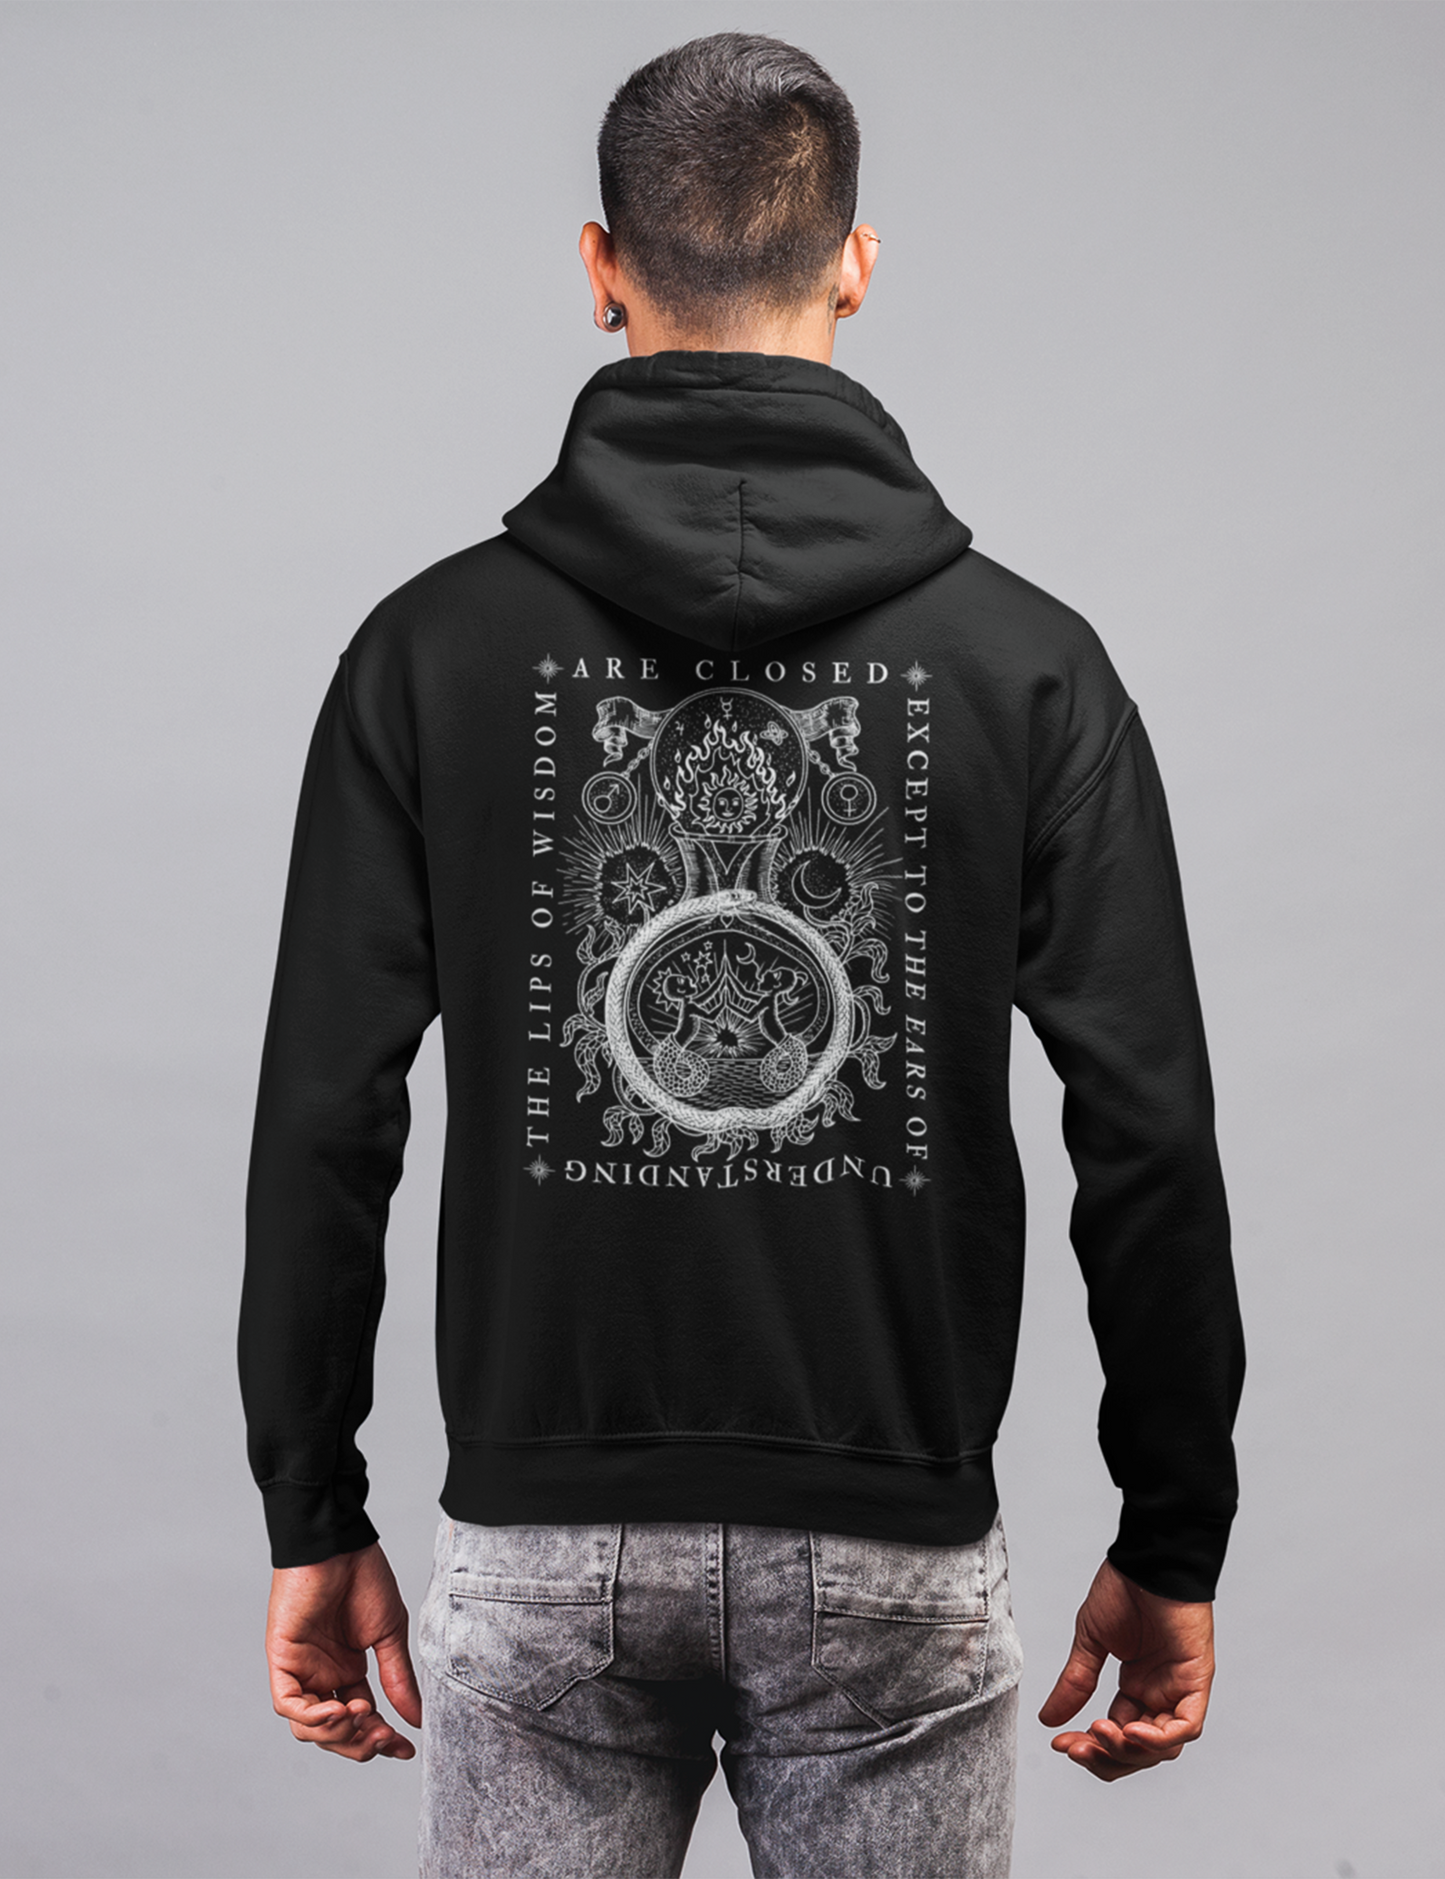 Ouroboros Alchemy Occult Aesthetic Zip Up Hoodie